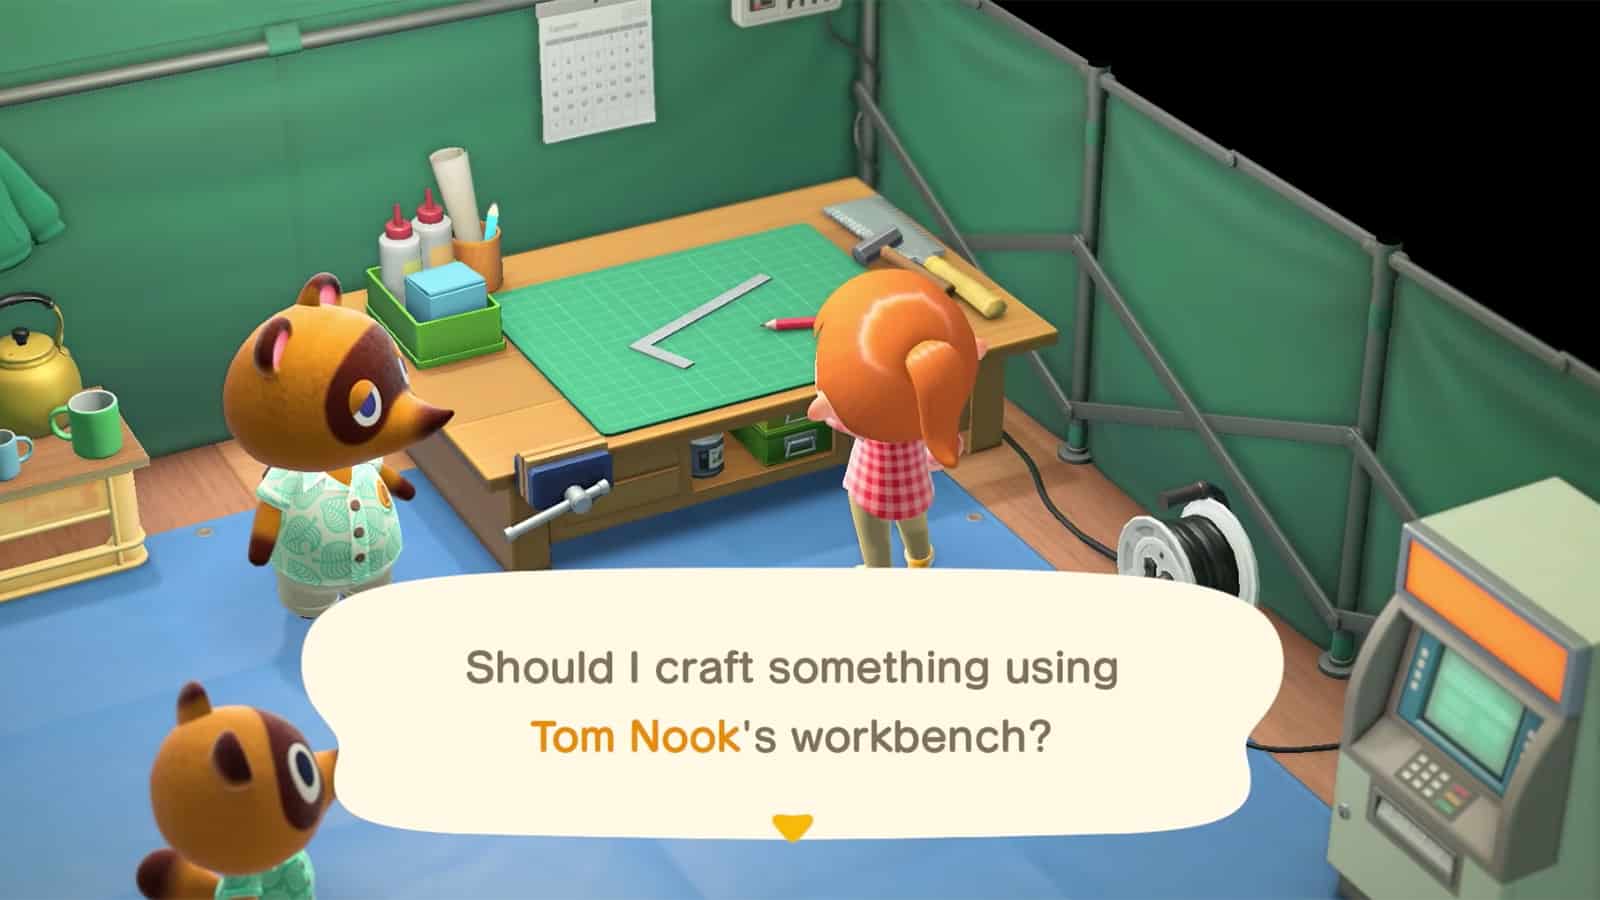 Animal Crossing New Horizons Crafting